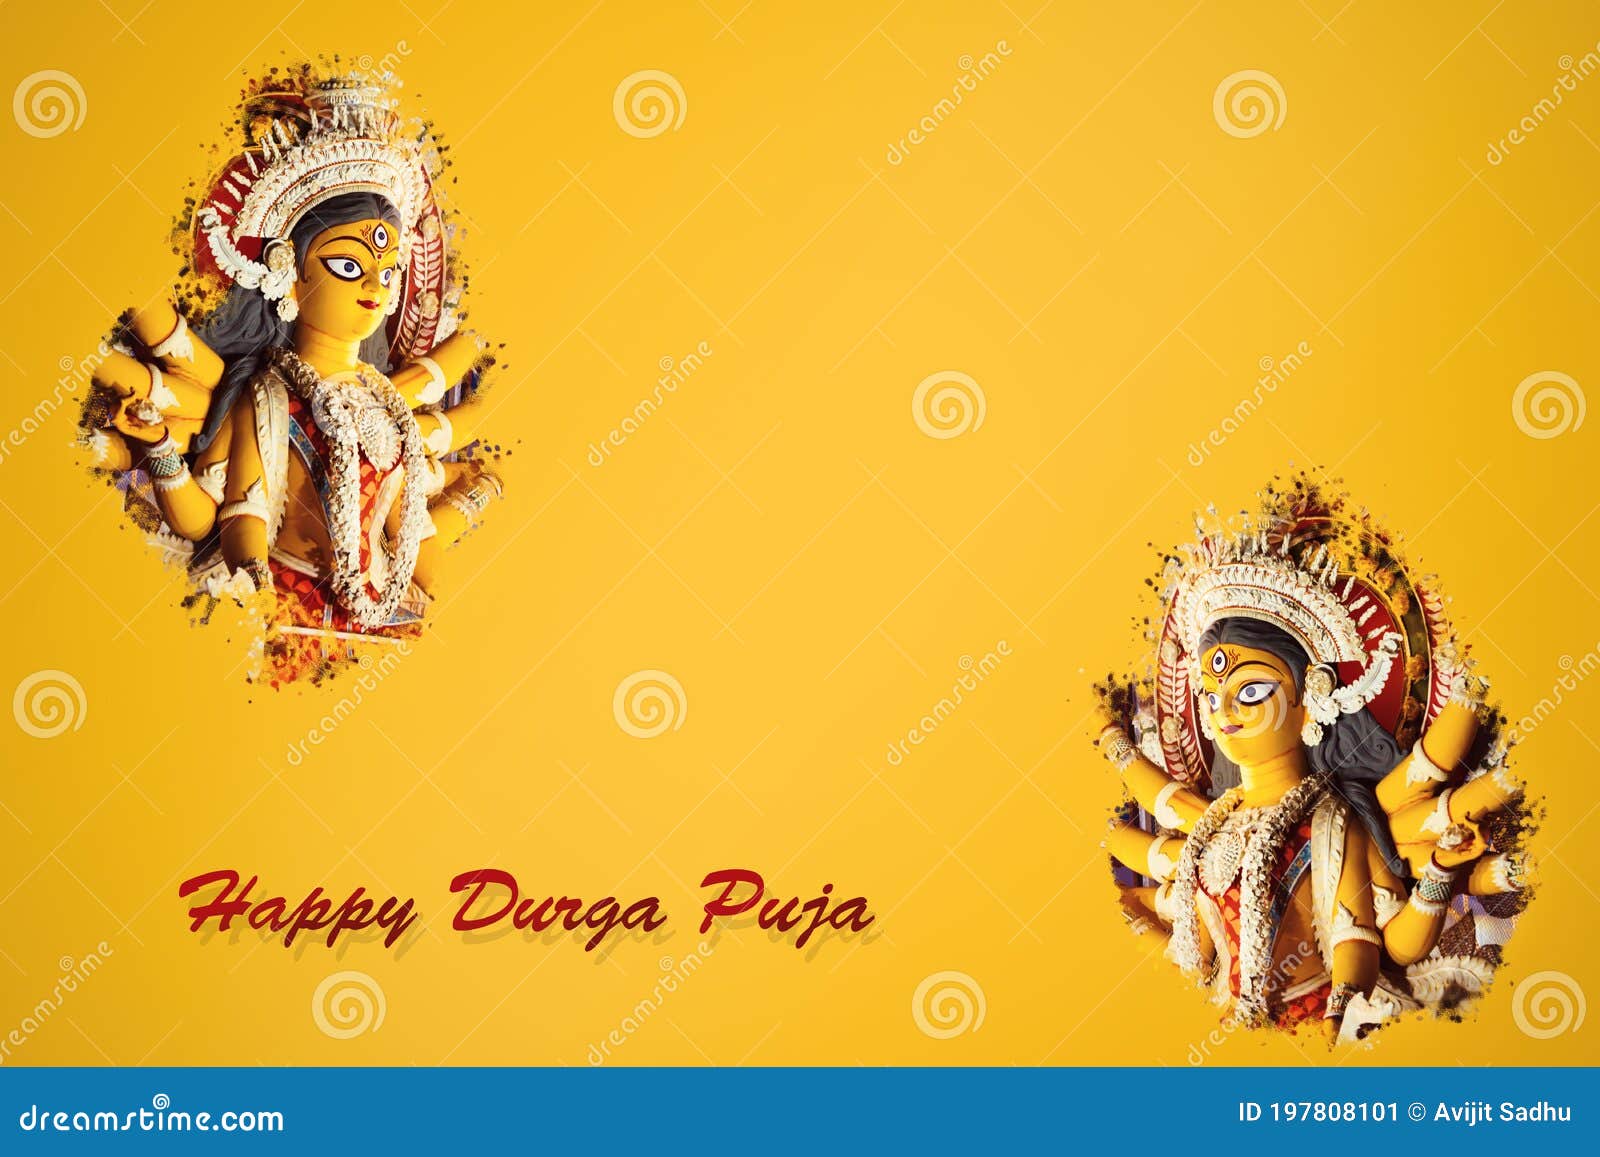 Happy Durga Puja Background Stock Image - Image of bengal, bengali:  197808101